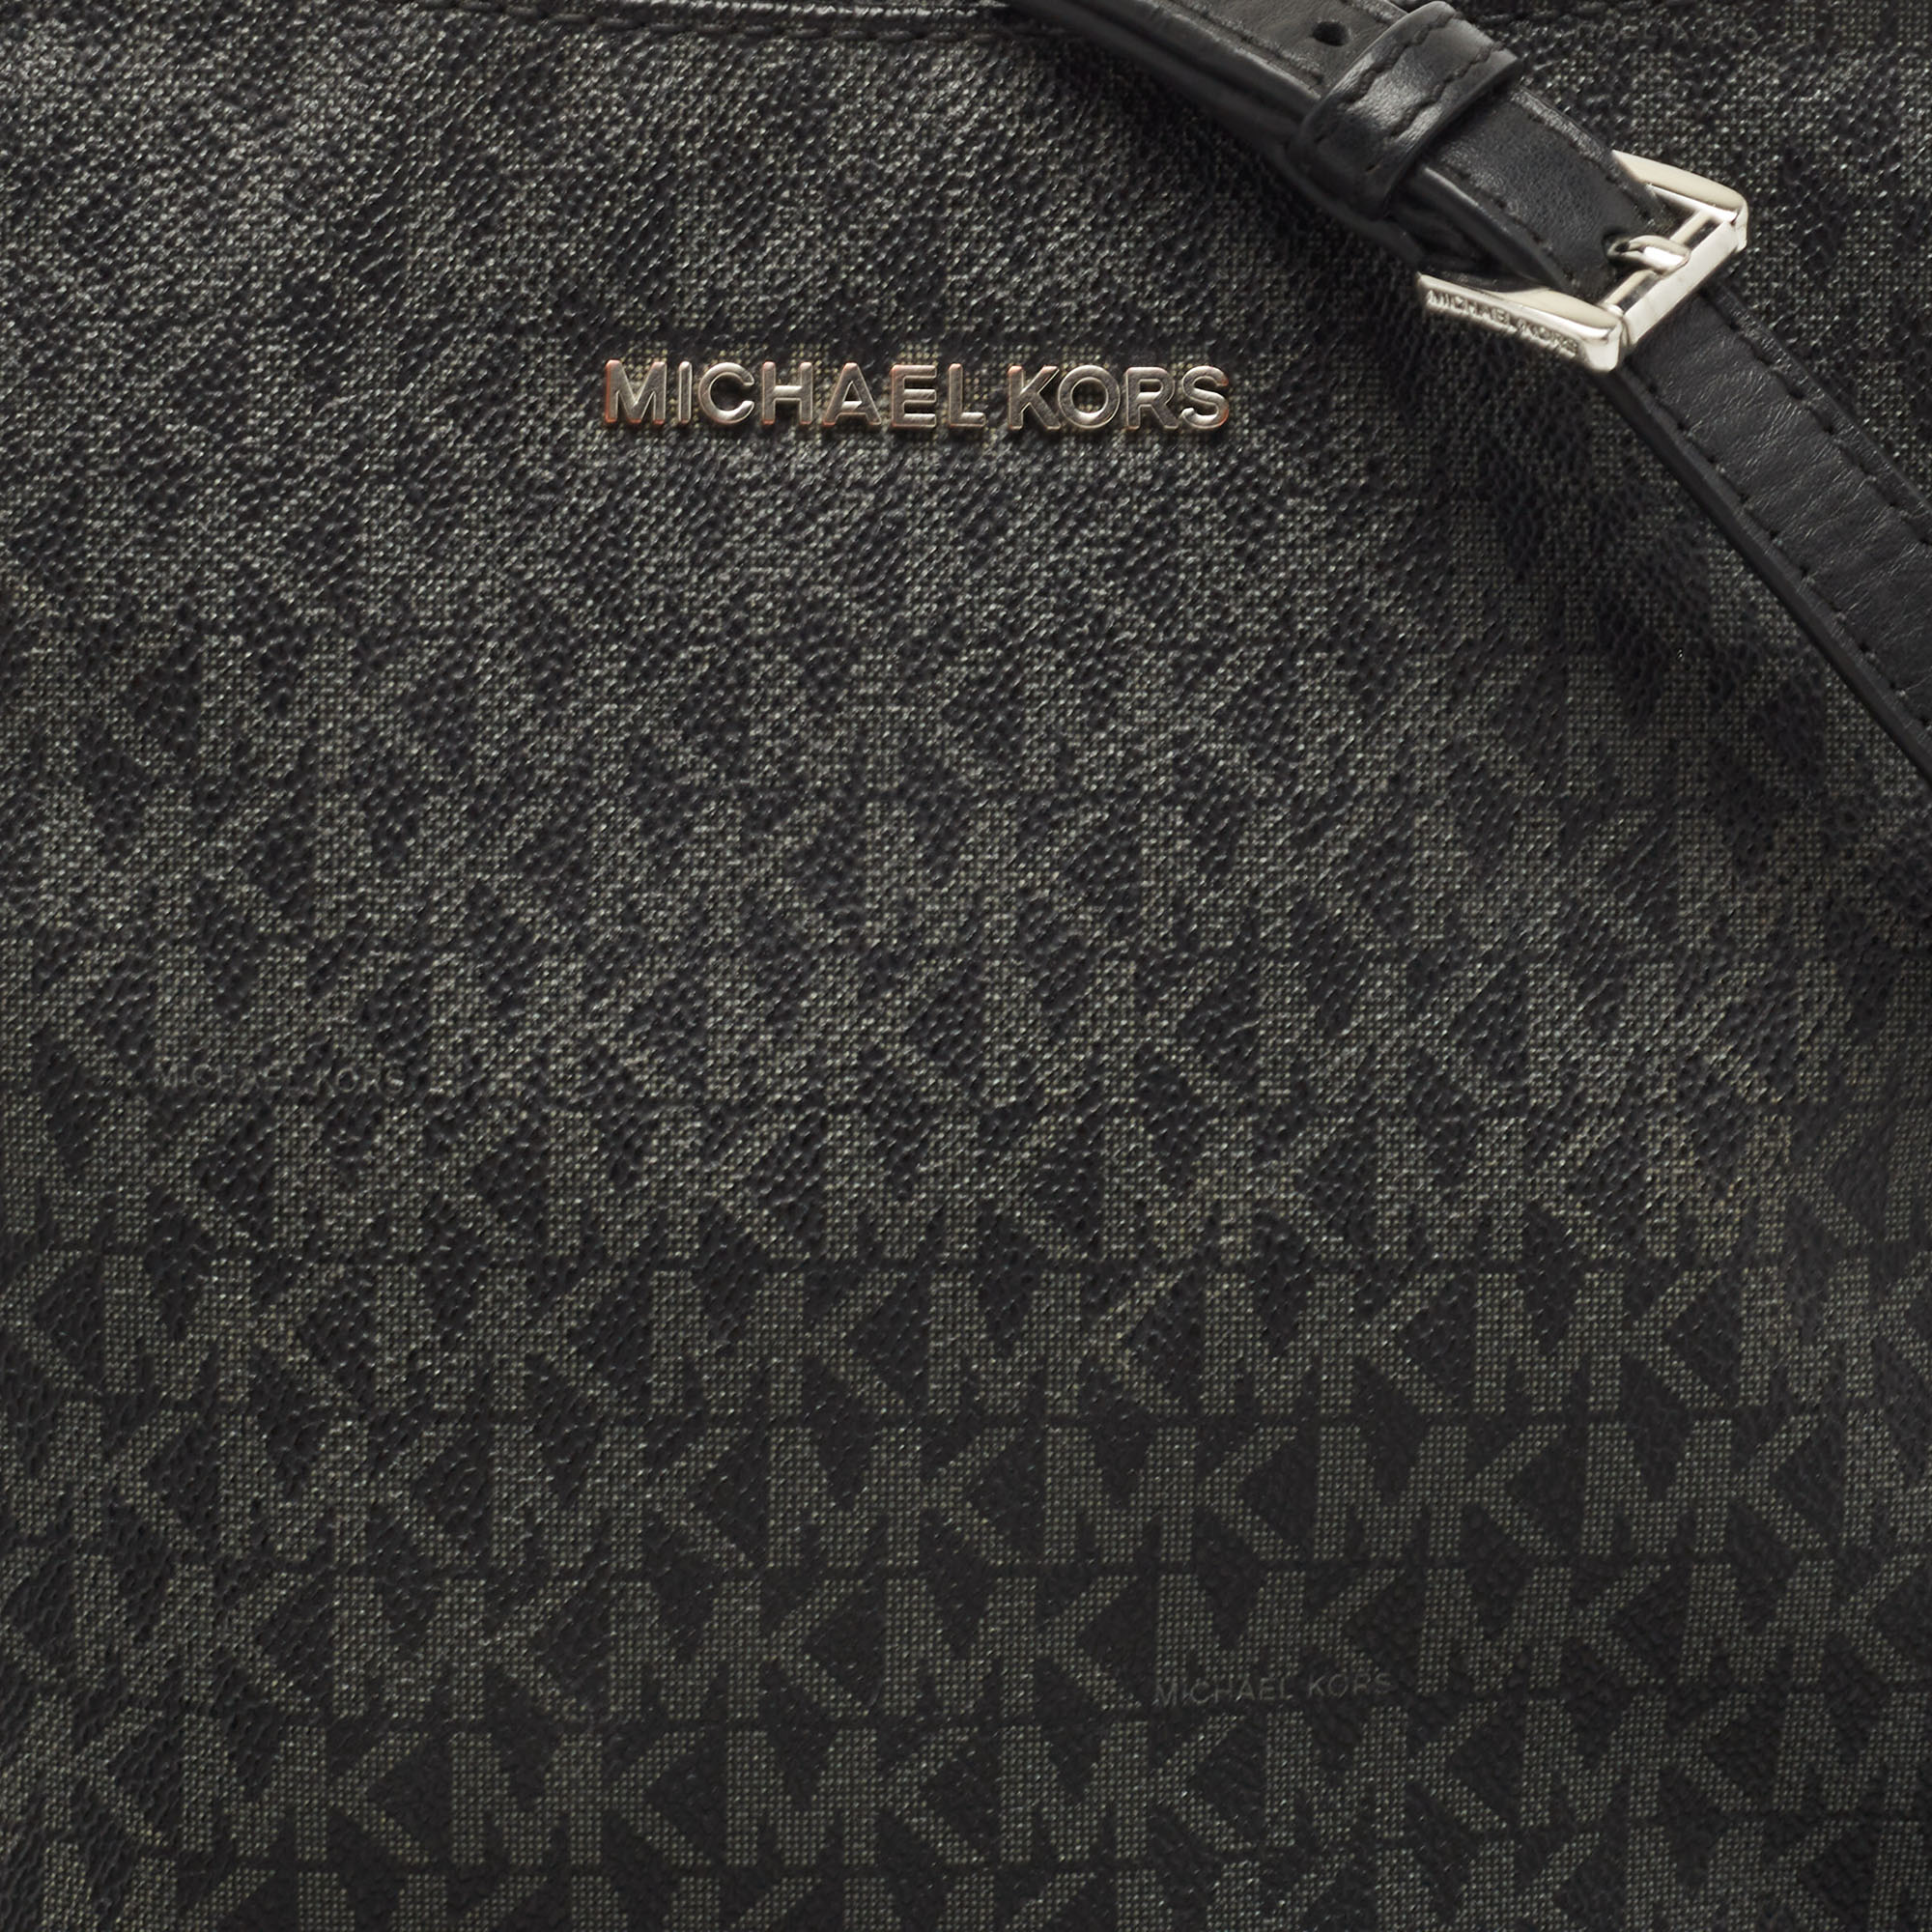 Michael Kors Black Signature Coated Canvas And Leather Jet Set Messenger Bag